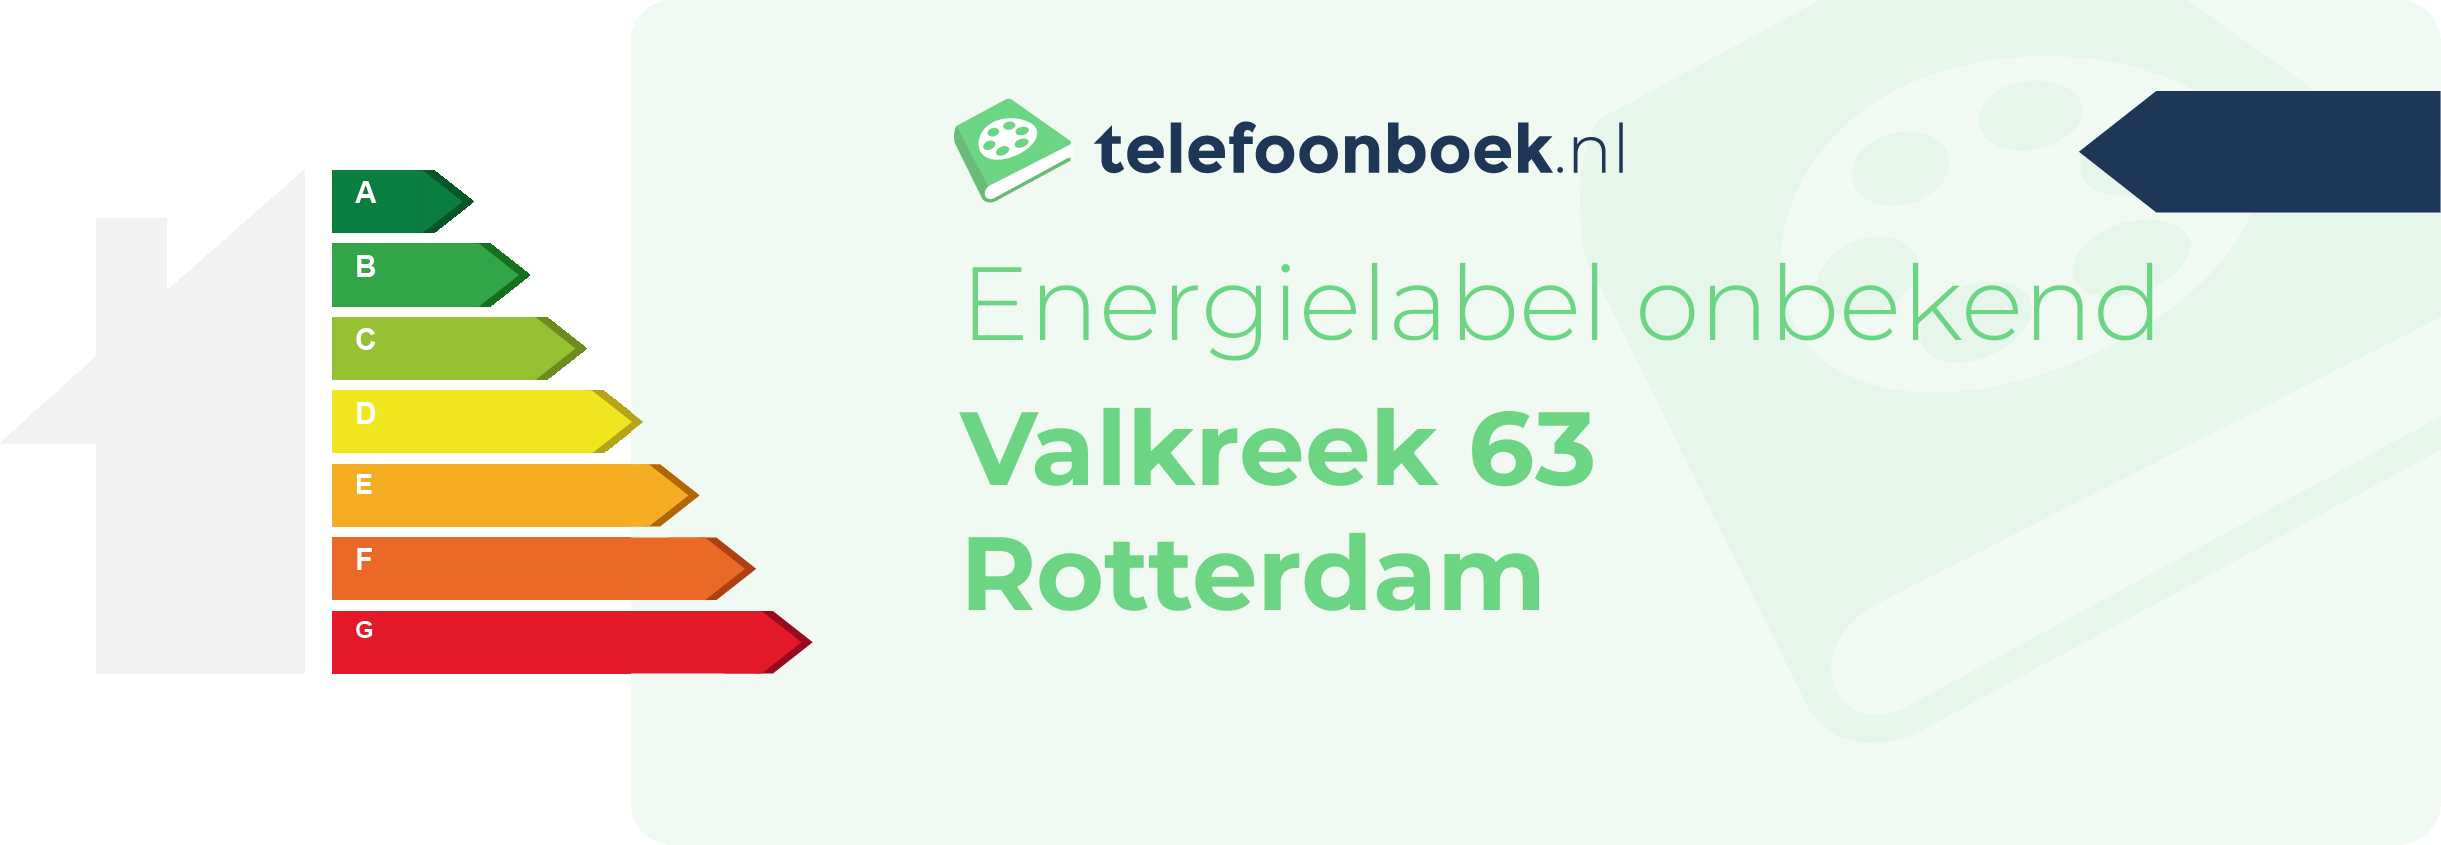 Energielabel Valkreek 63 Rotterdam